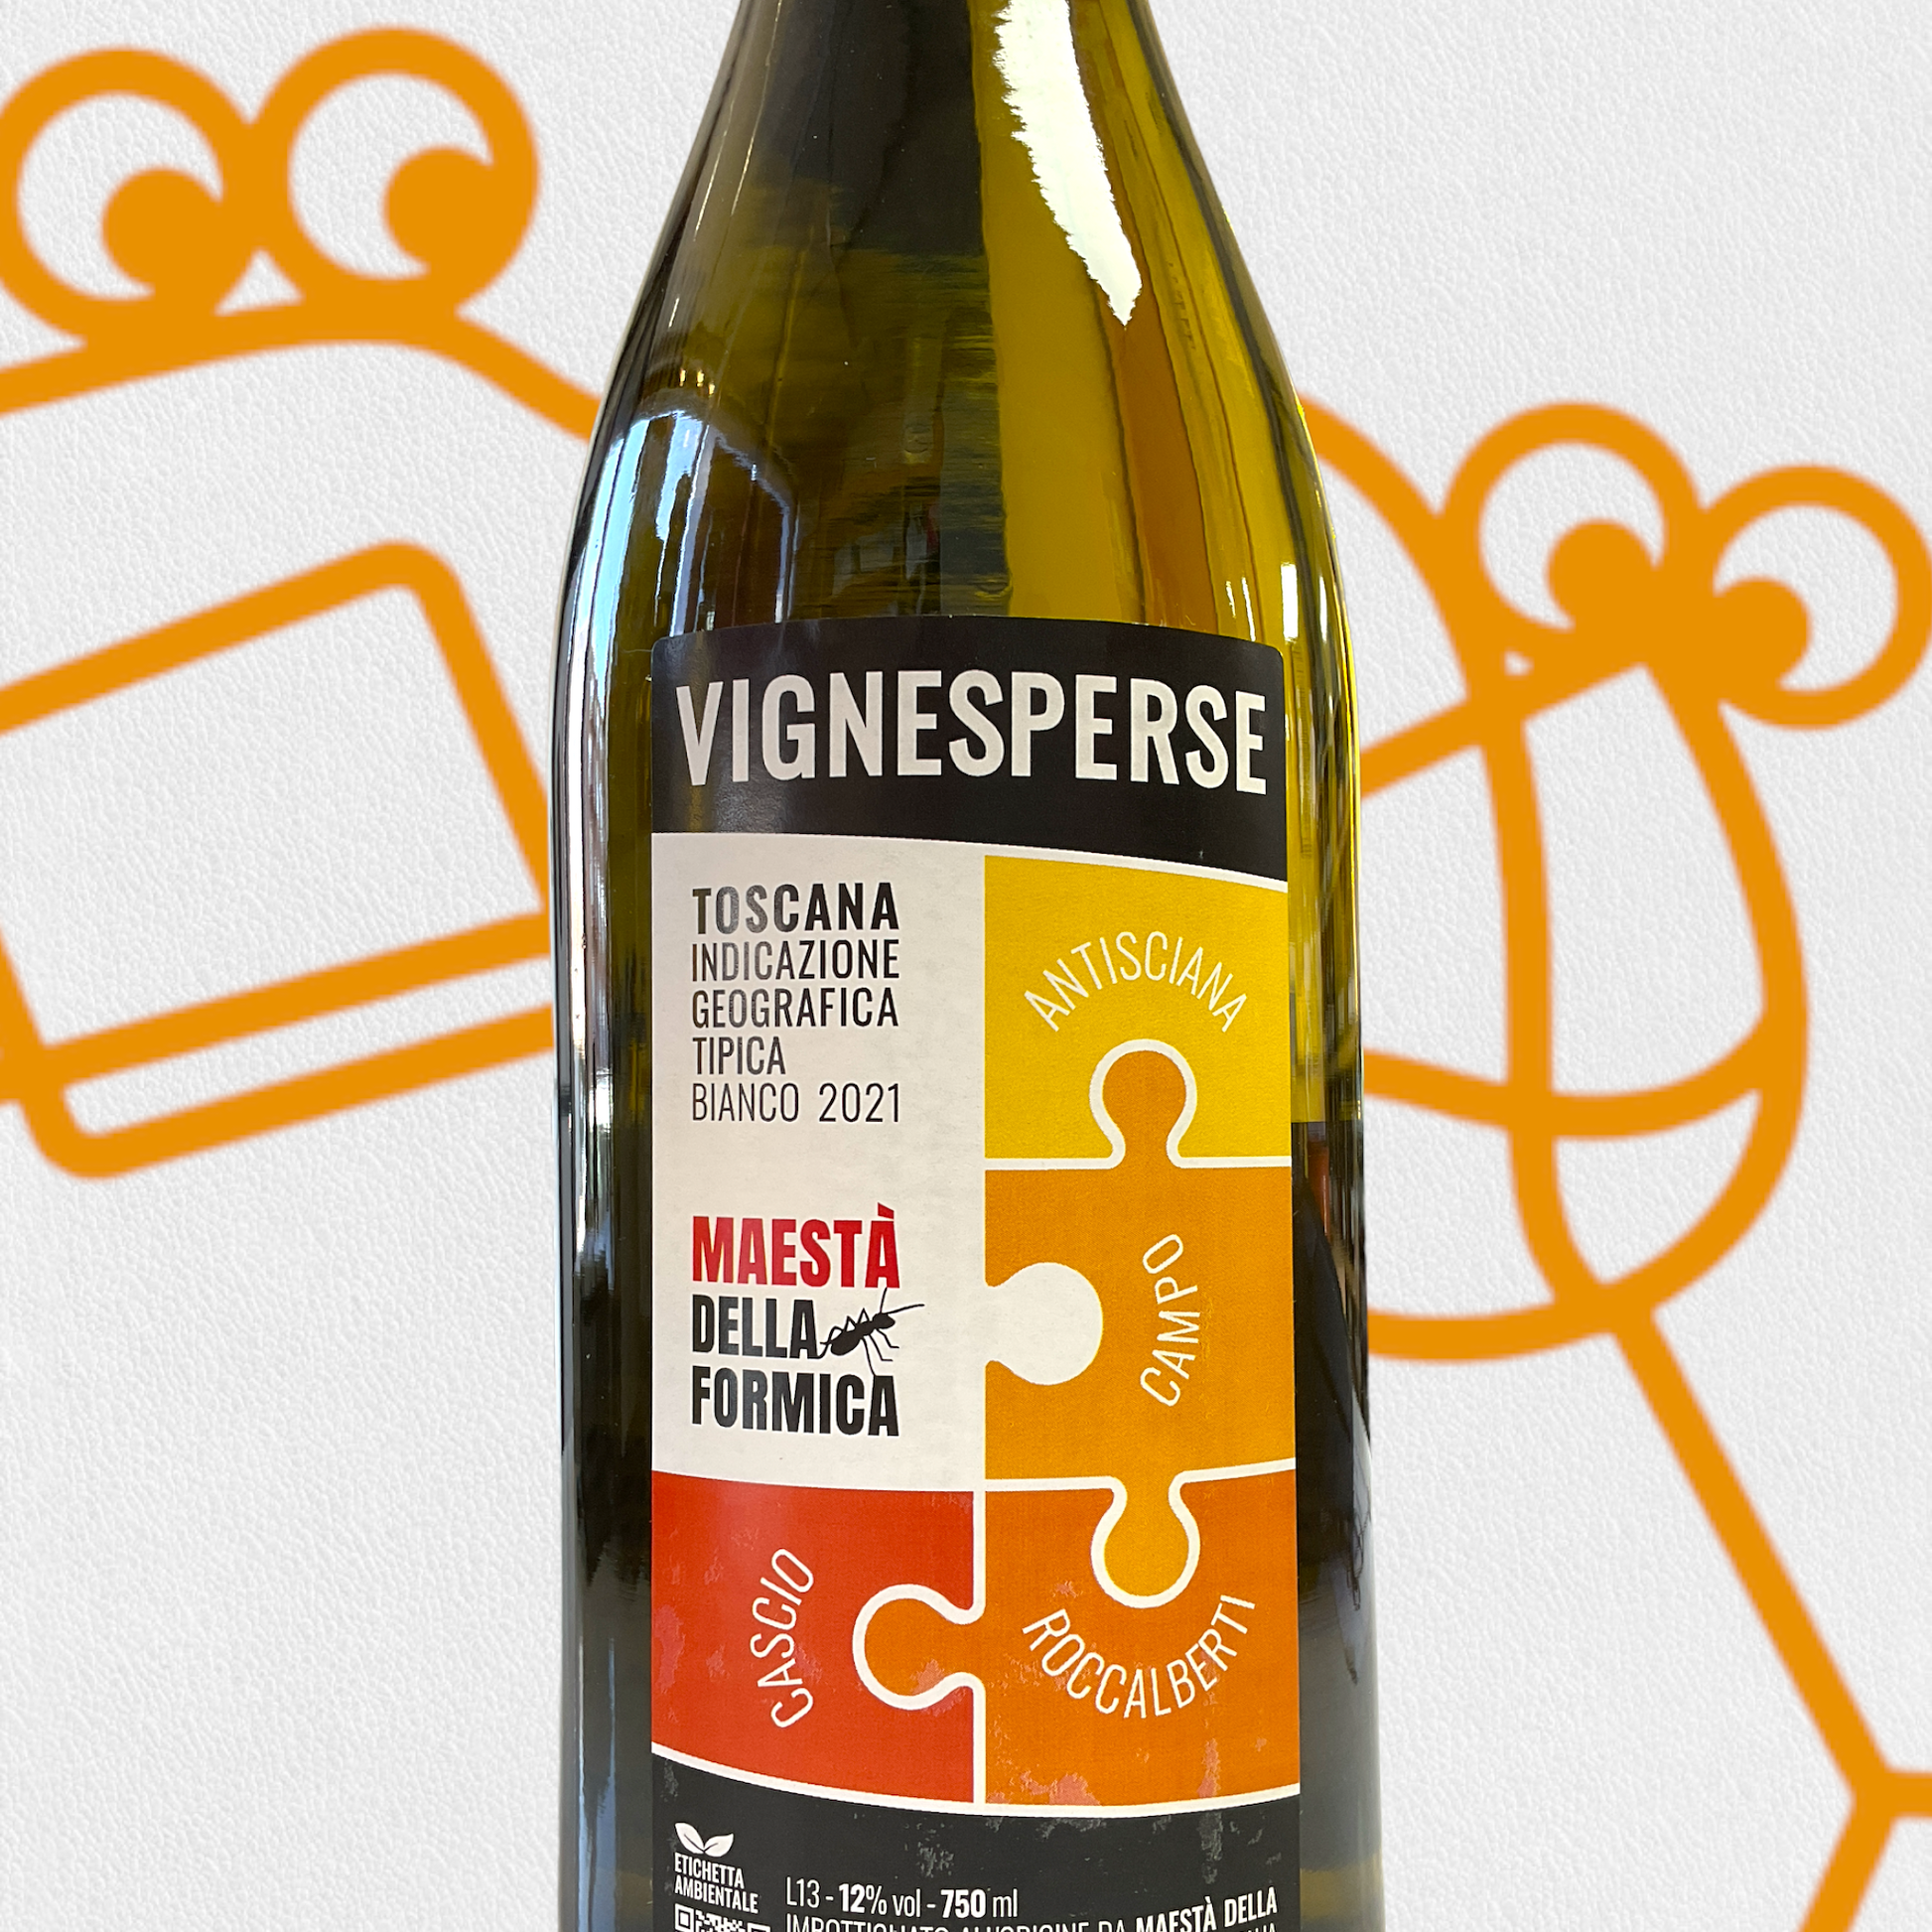 Maesta della Formica 'Vignesperse' 2021 Tuscany, Italy - Williston Park Wines & Spirits